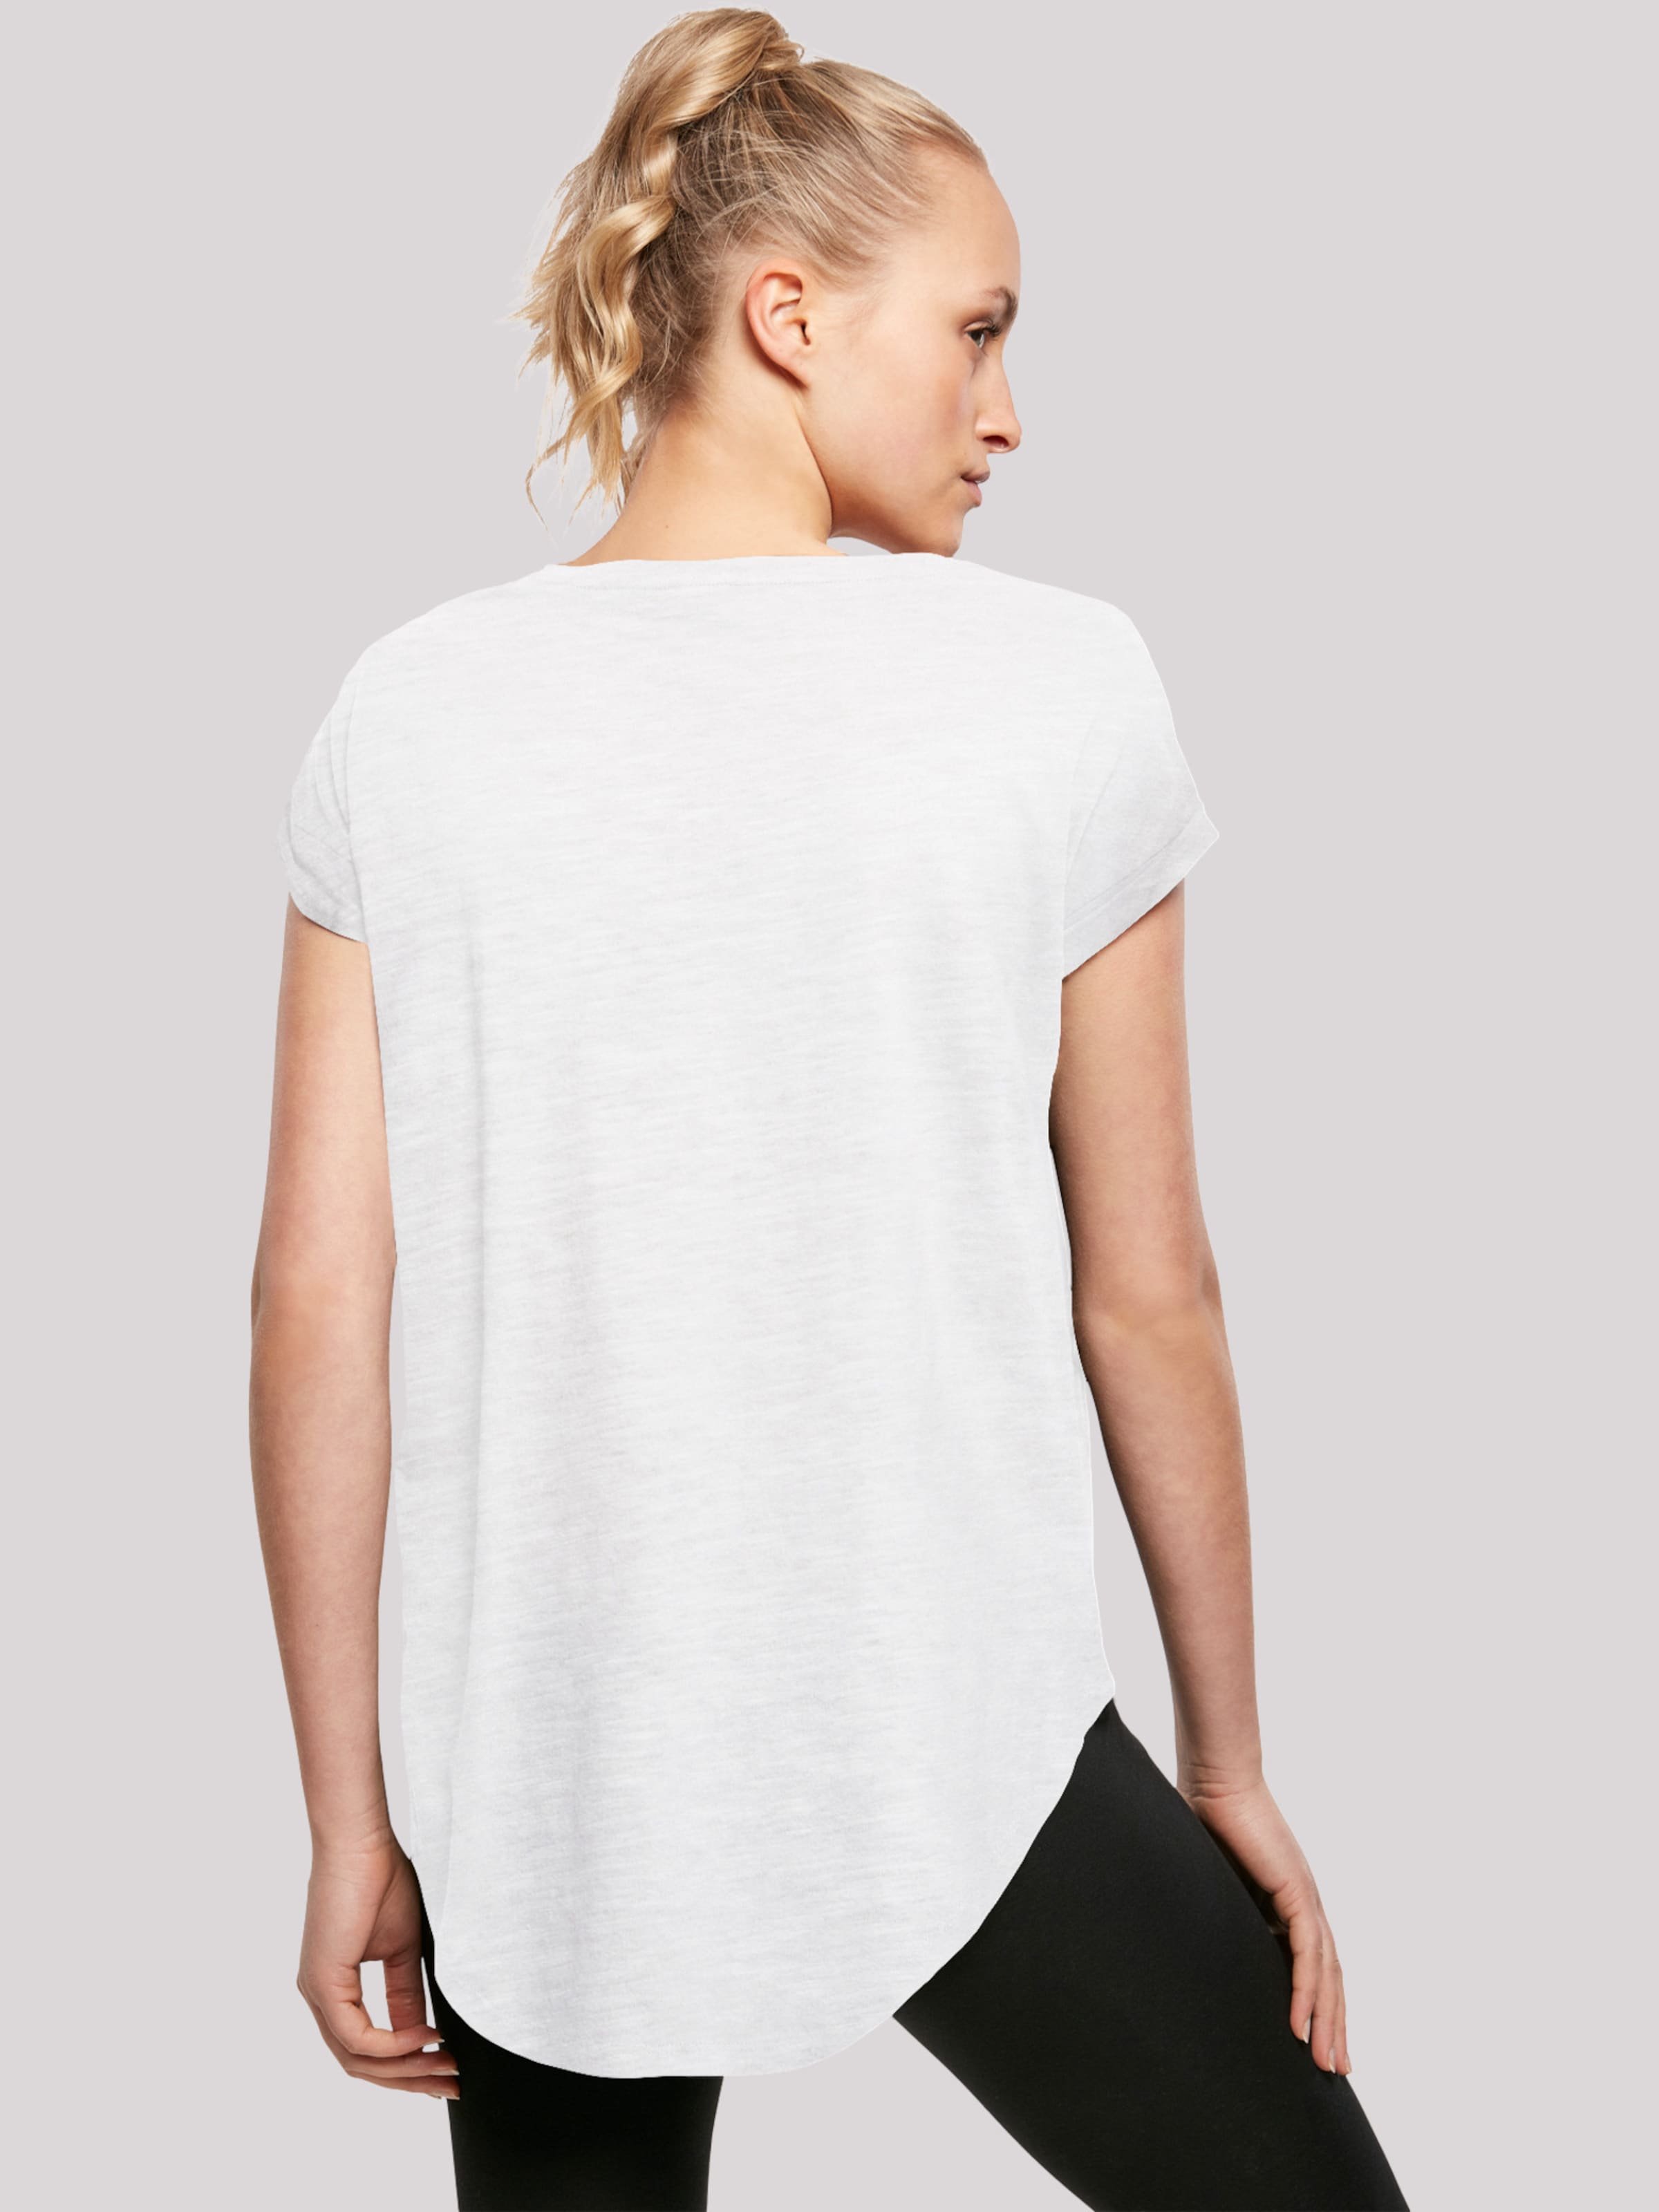 Frauen Shirts & Tops F4NT4STIC Shirt in Weiß, Weißmeliert - HJ18321